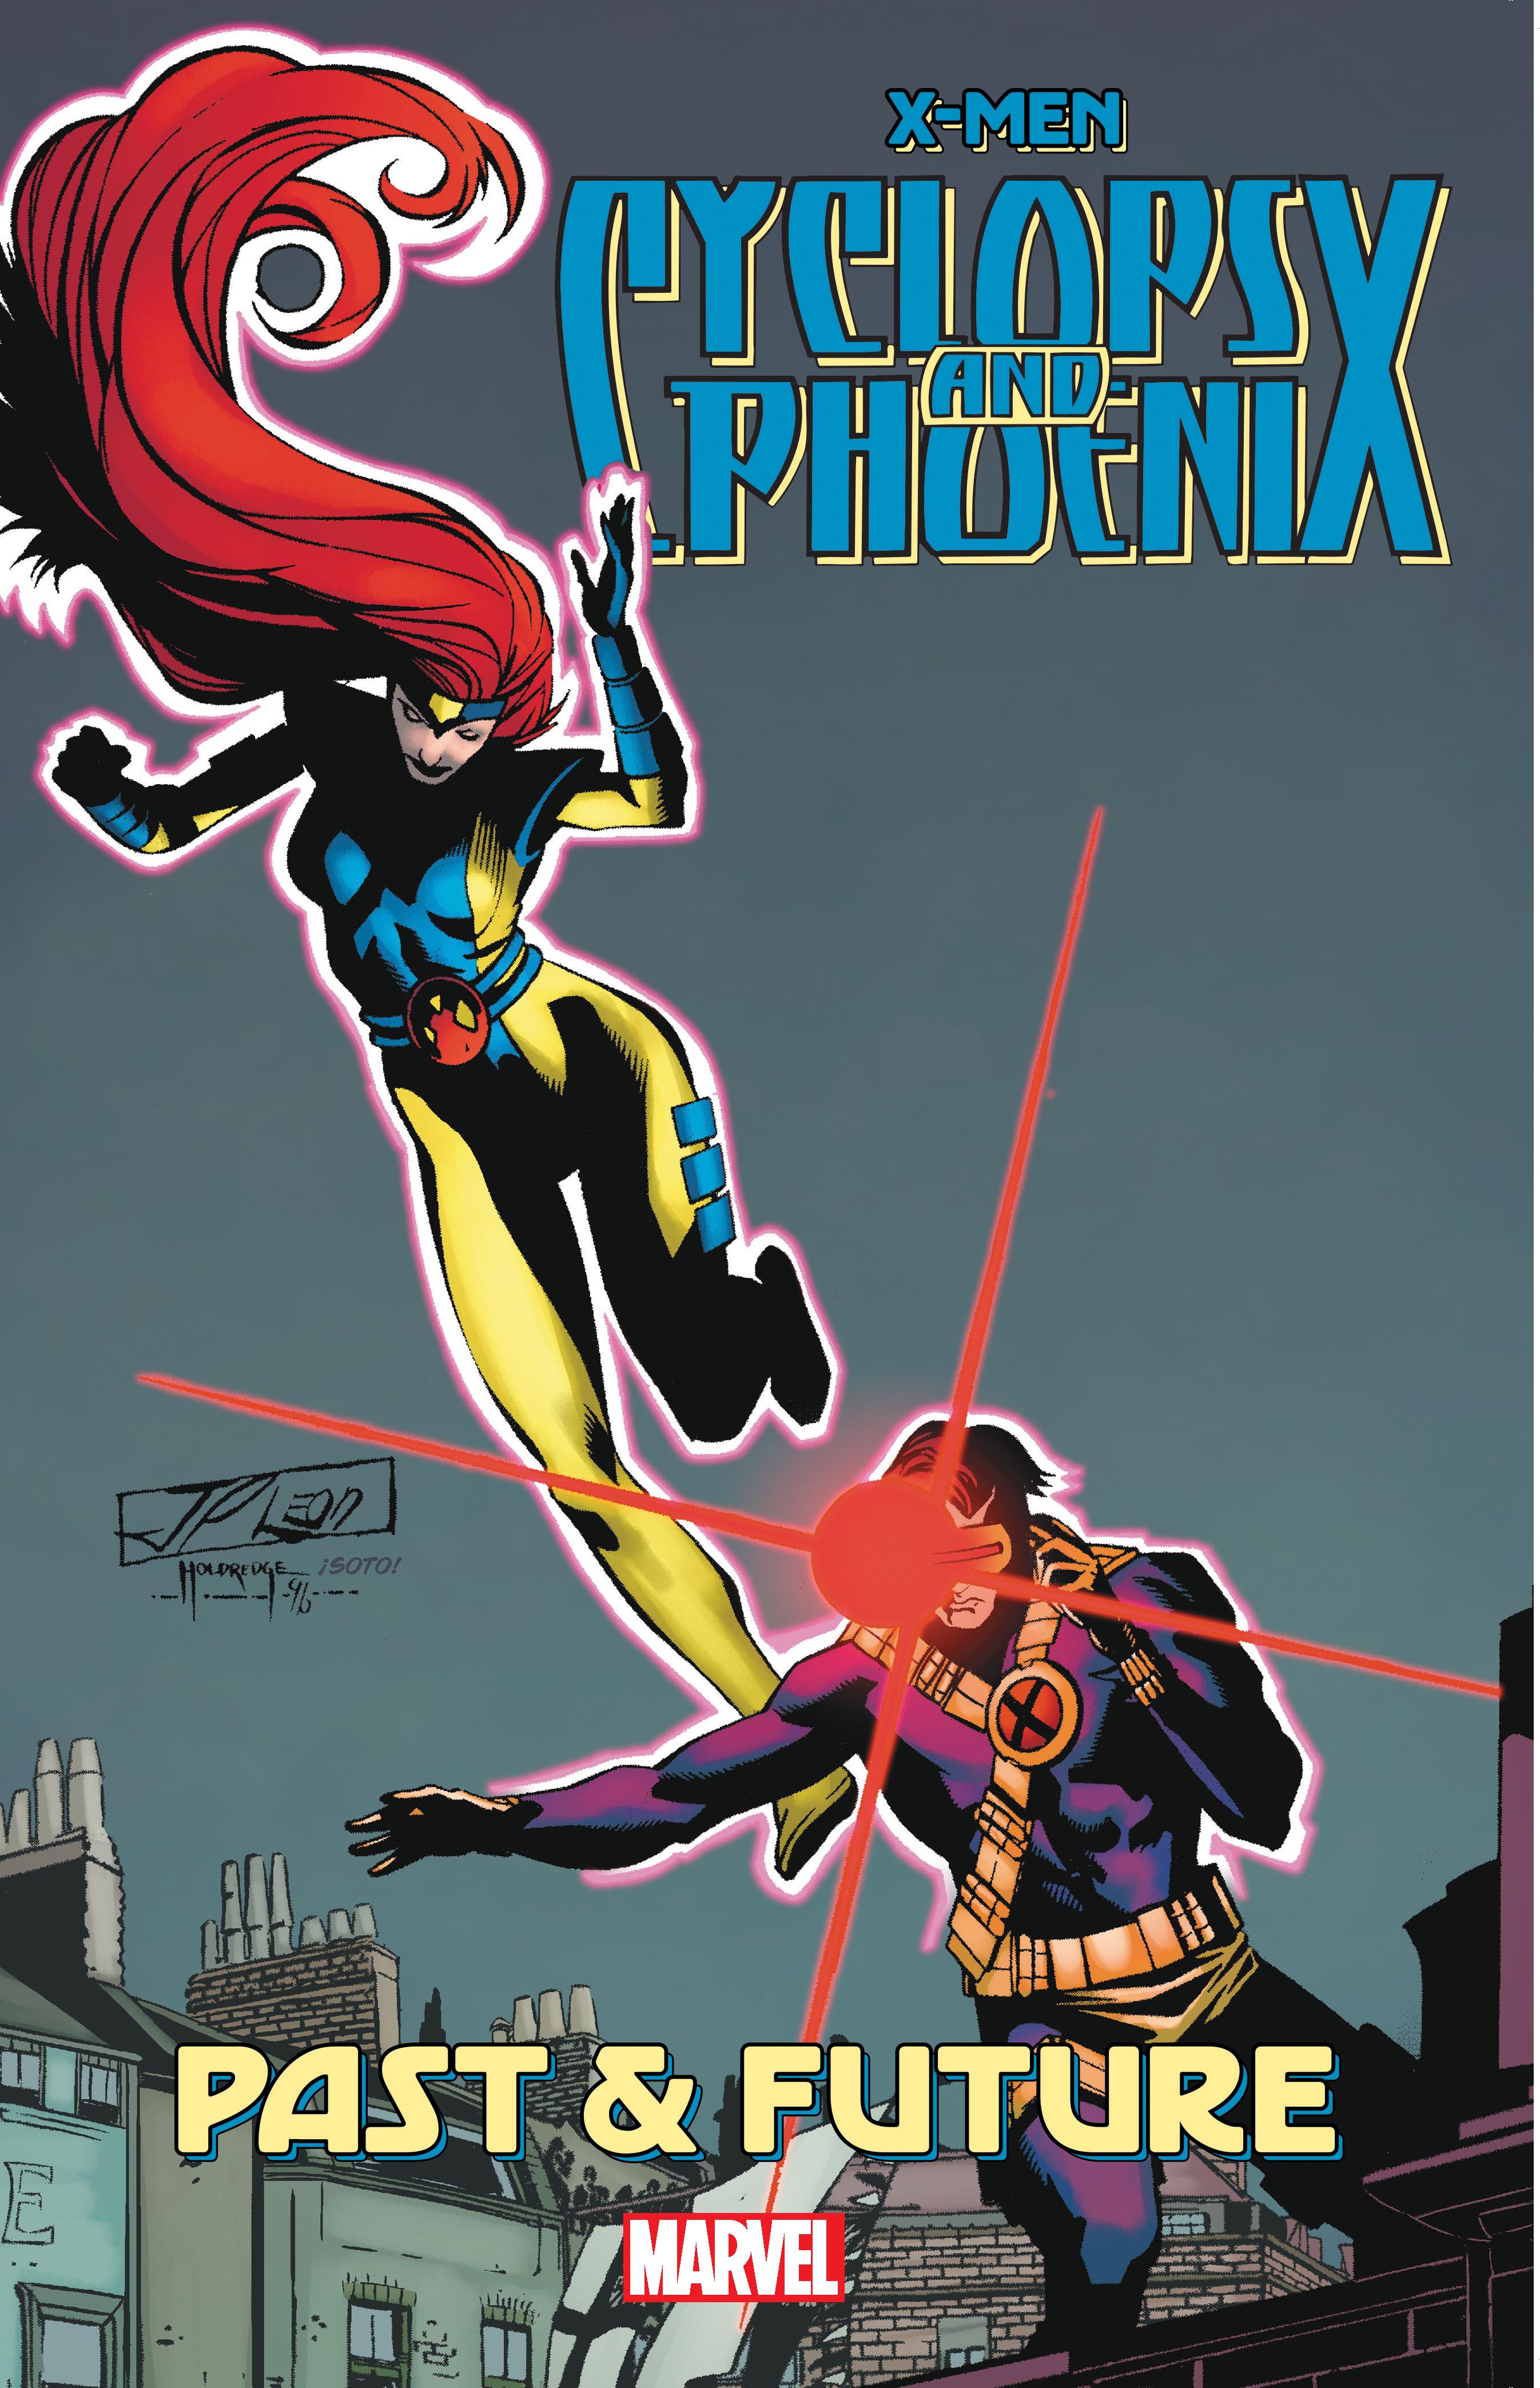 X-Men: Cyclops & Phoenix - Past & Future  (Trade Paperback)